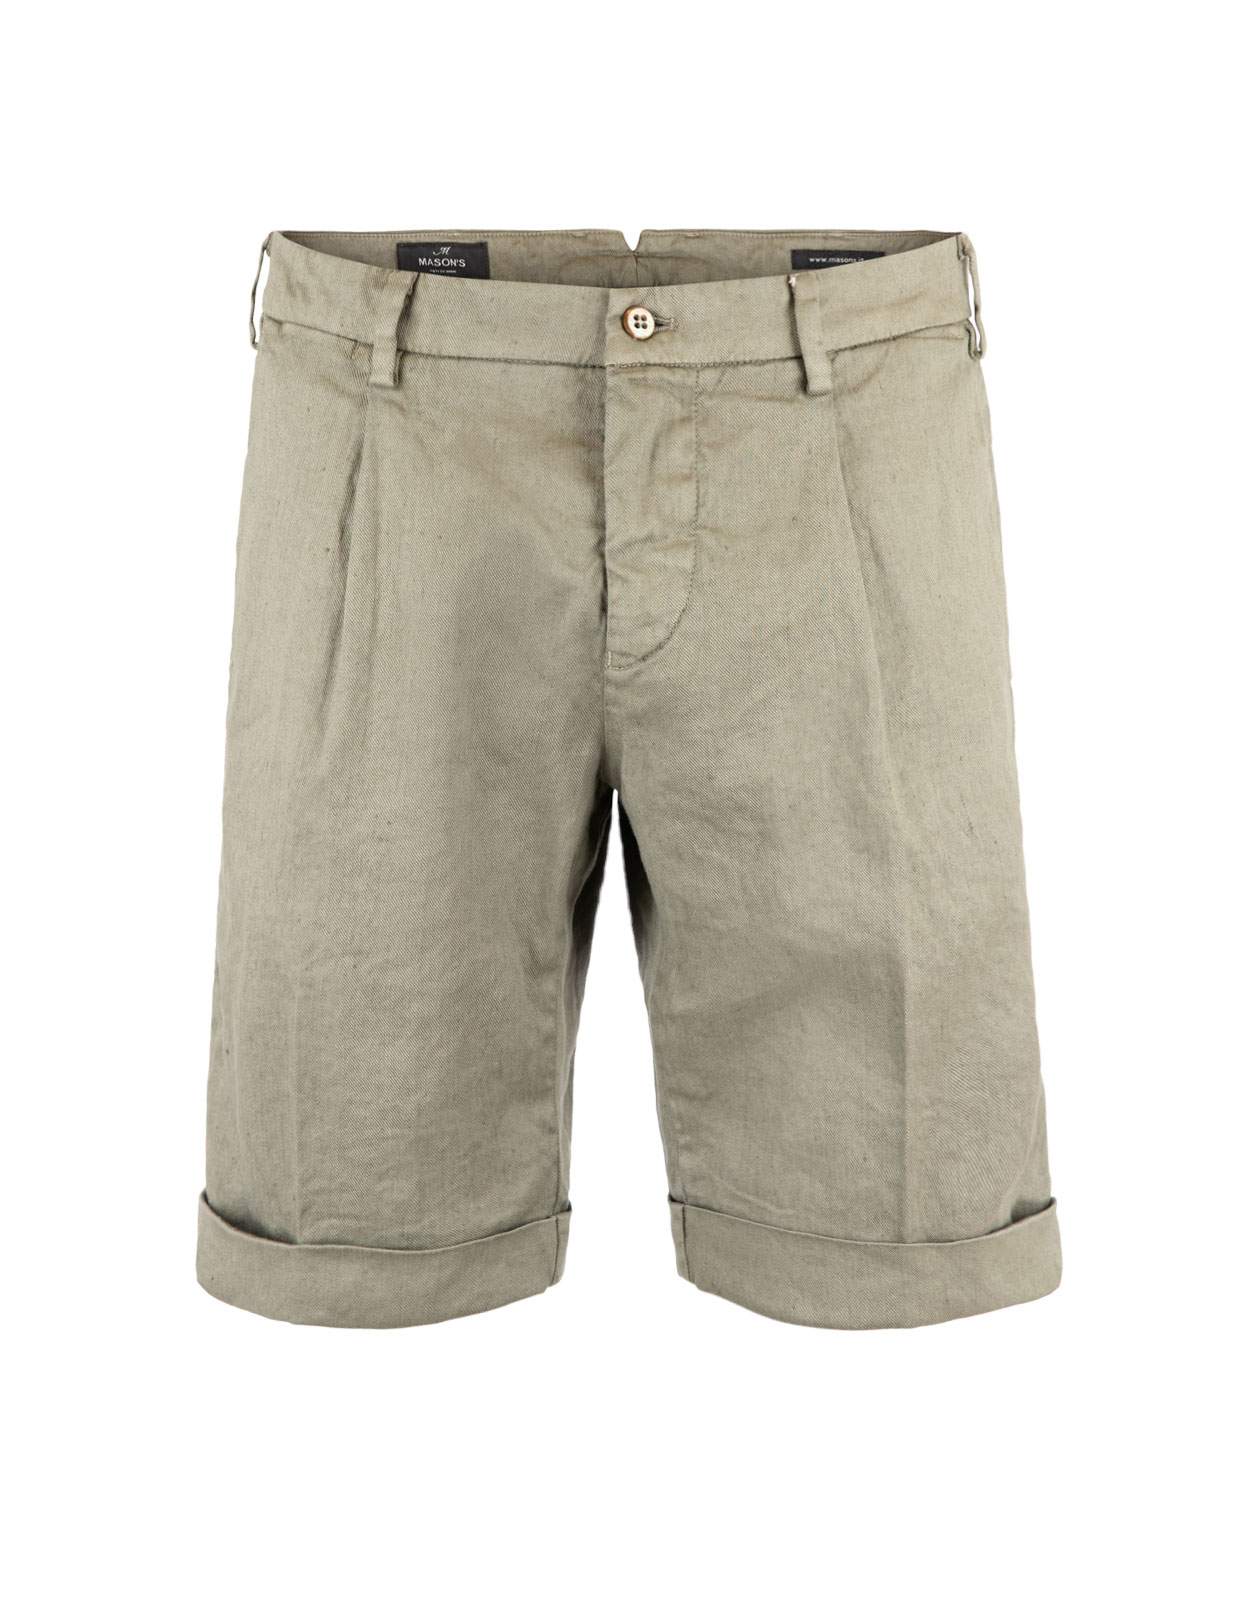 Milano Pleat Shorts Linen Cotton Stretch Military Stl 48